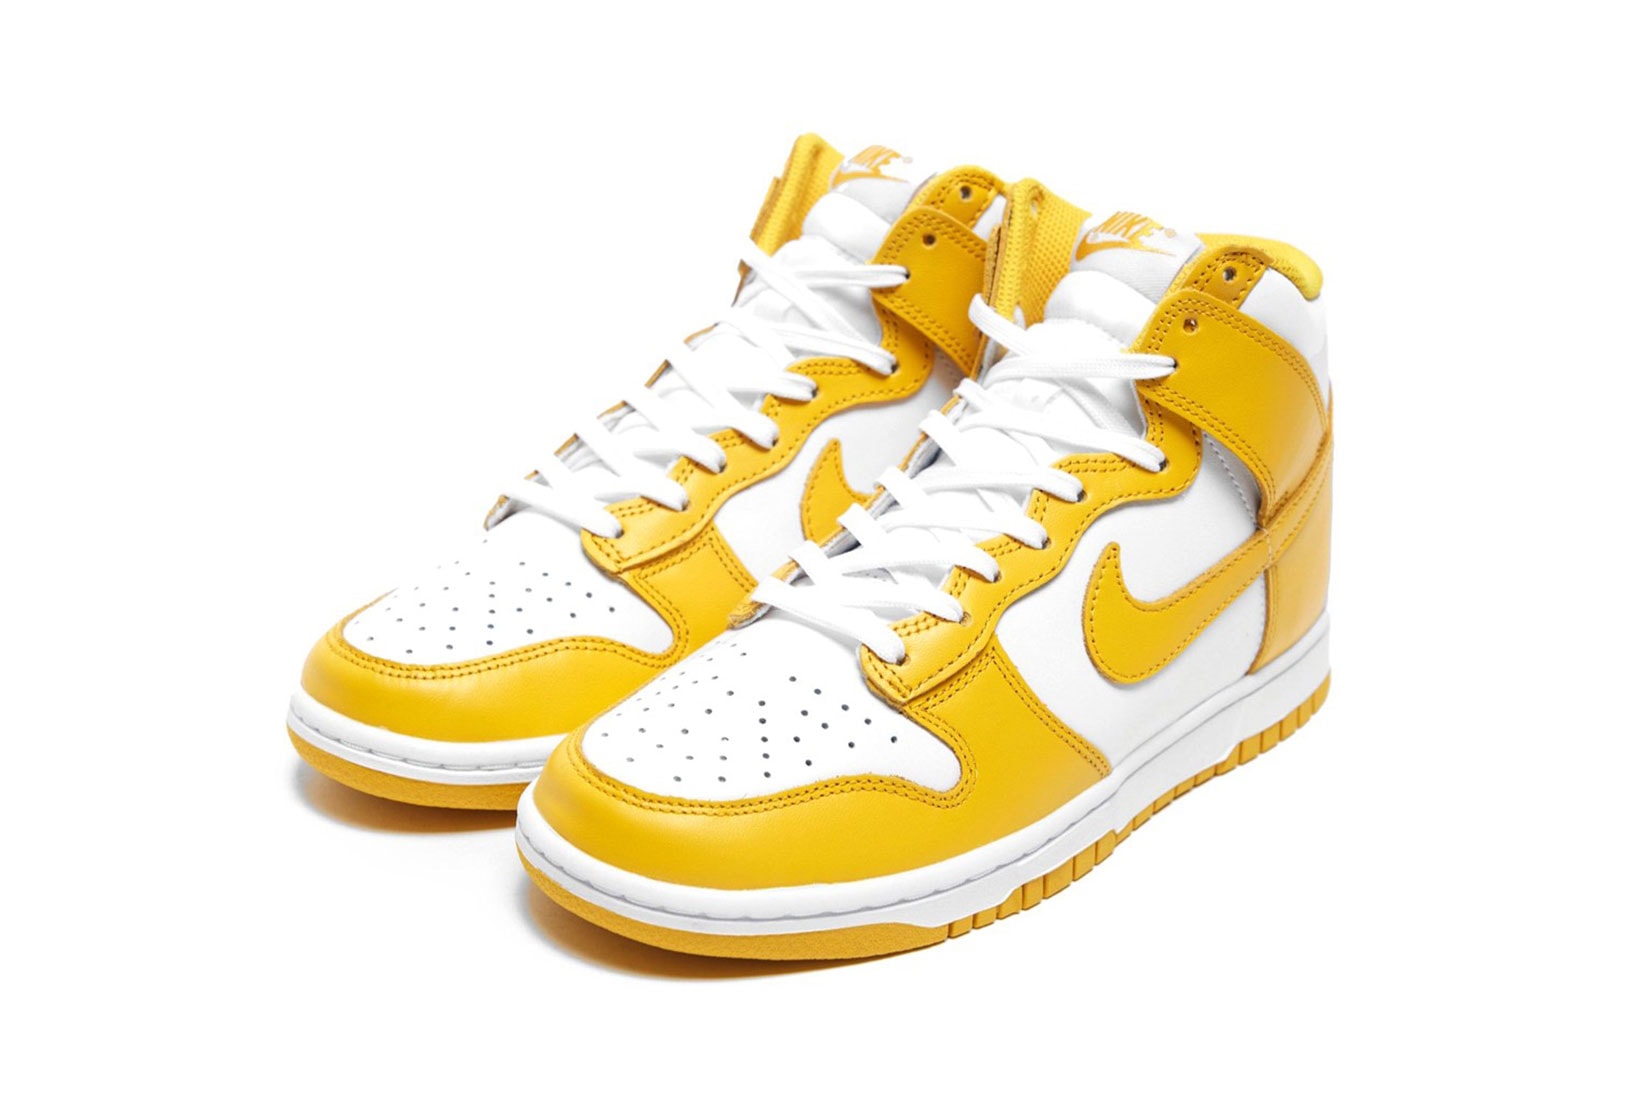 nike dunk high sneakers dark sulfur yellow white colorway kicks sneakerhead shoes footwear lateral